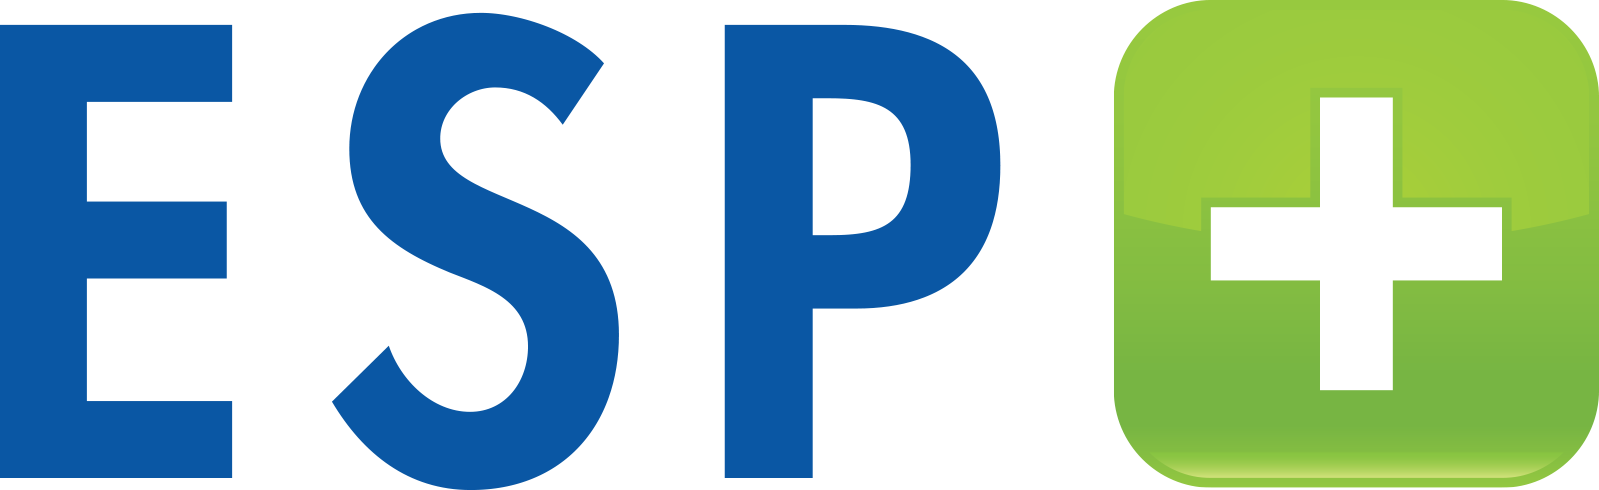 Trenton ESP logo RGB